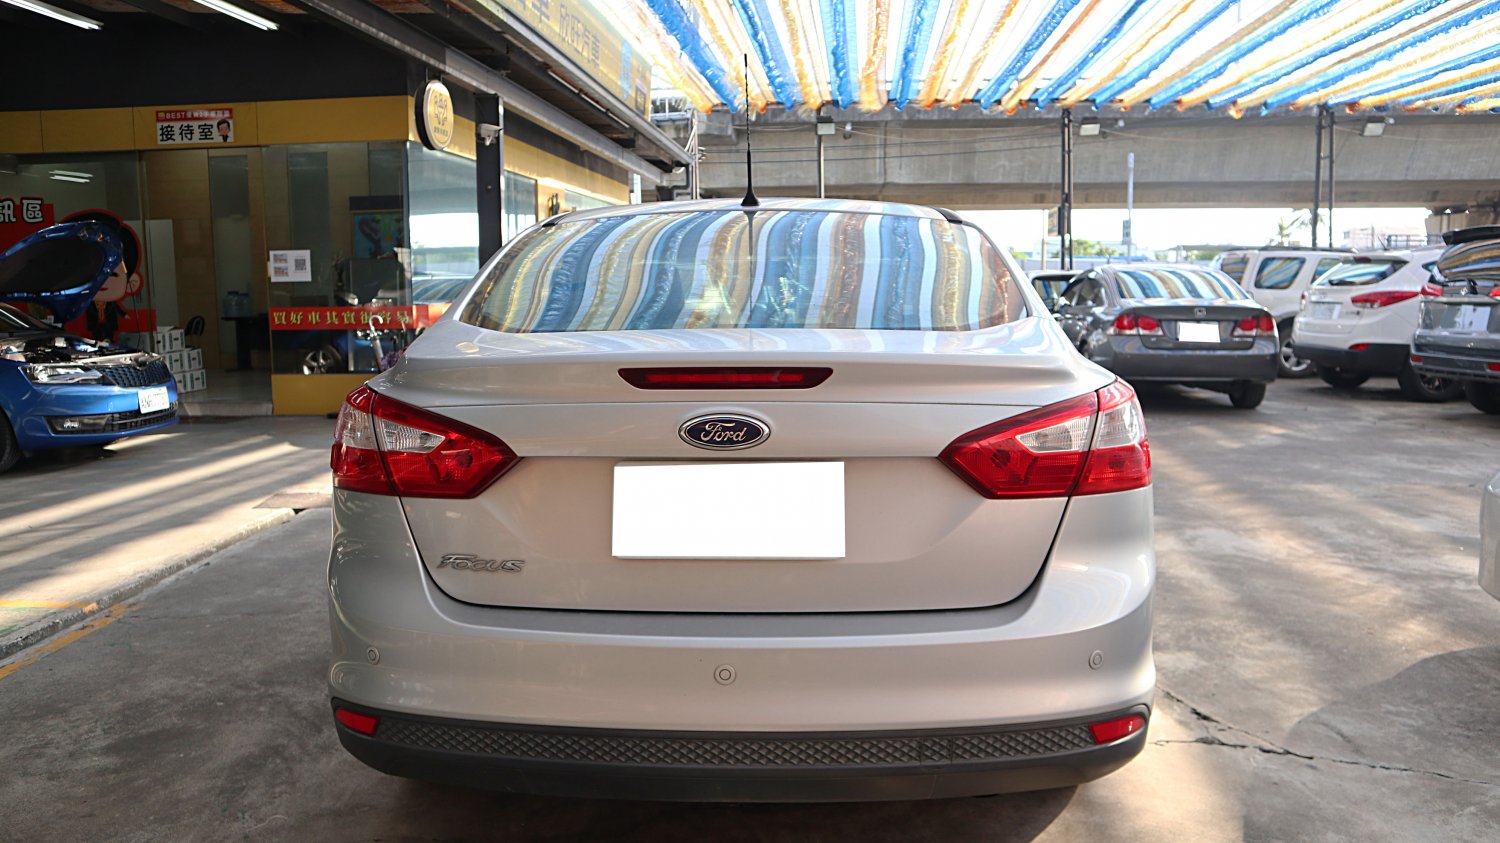 Ford 福特 ／ Focus ／ 2013年 ／ 2013年 Ford Focus 銀色 福特中古車 ／ 九州欣旺汽車 (台南)